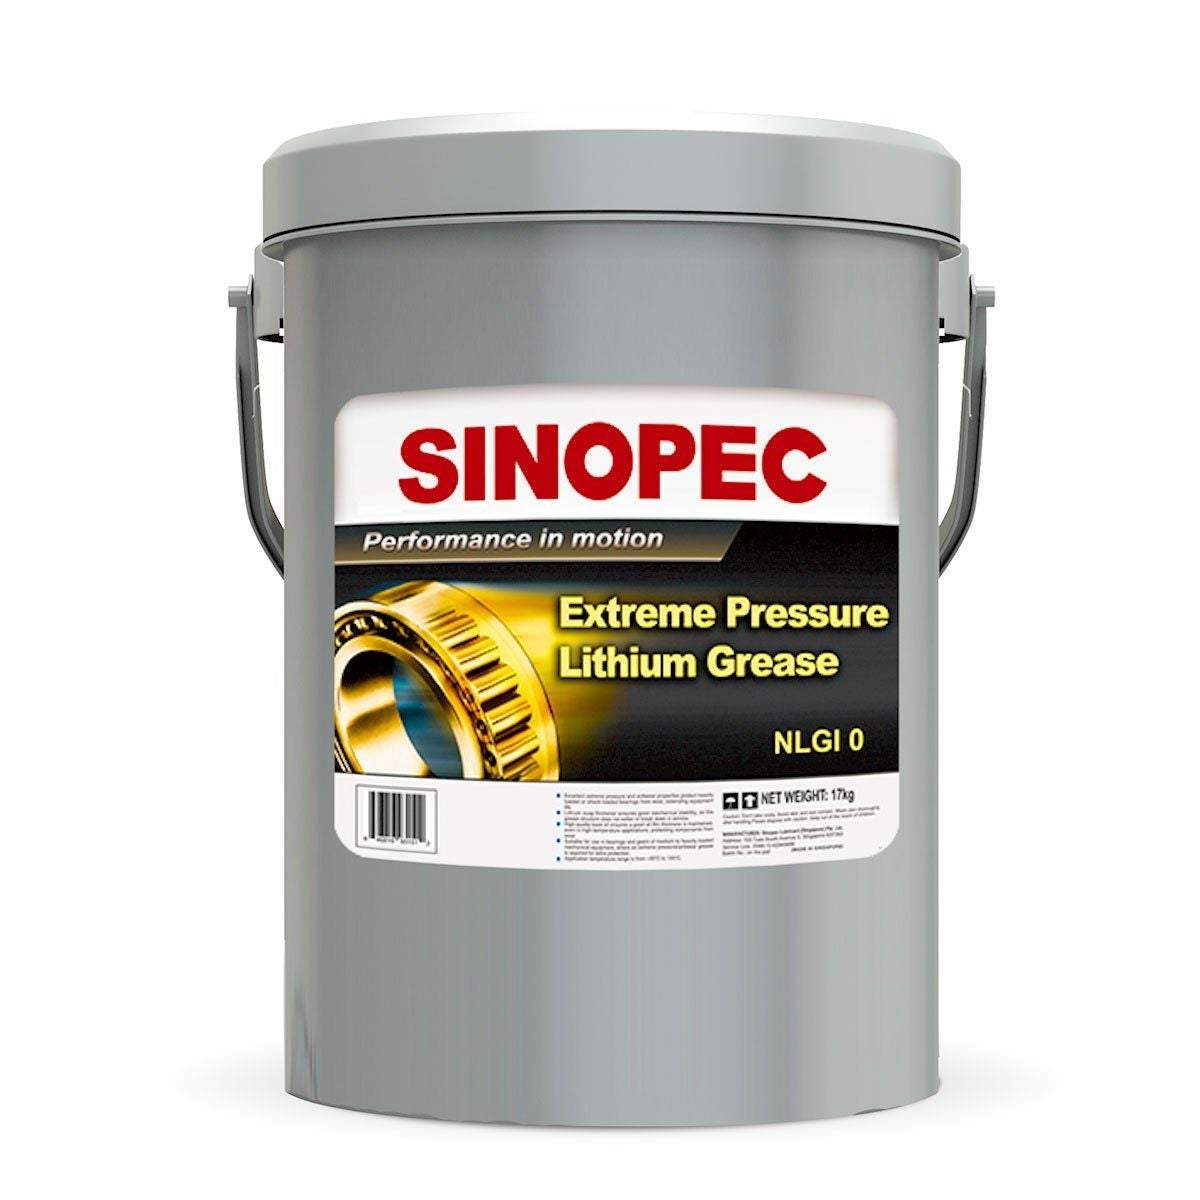 EP0 Lithium Grease Grease SINOPEC 35 lb Pail 